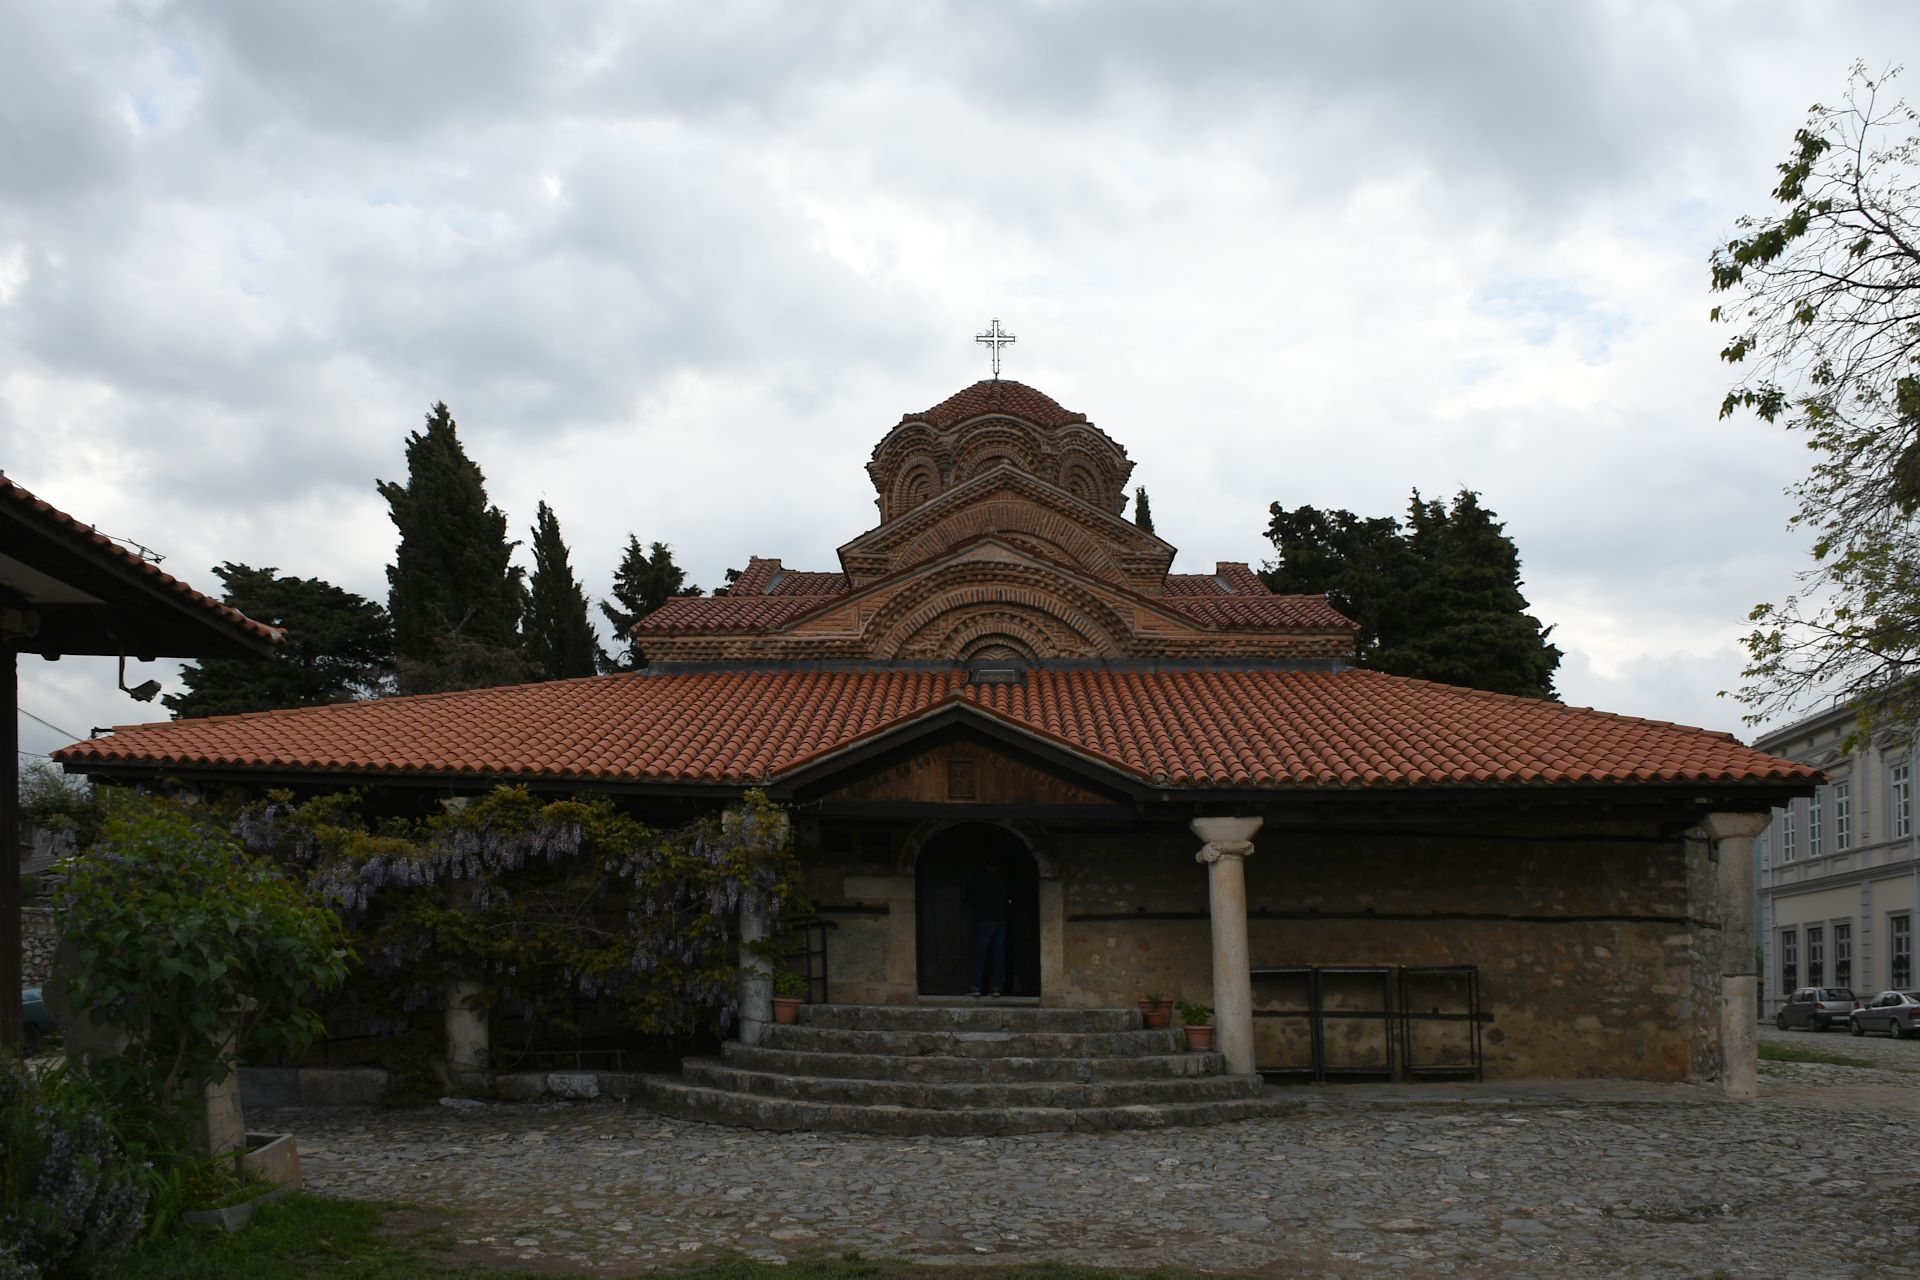 Sveti Kliment (Црквата Пресвета Богородица Привлептос) (13. Jhdt.)